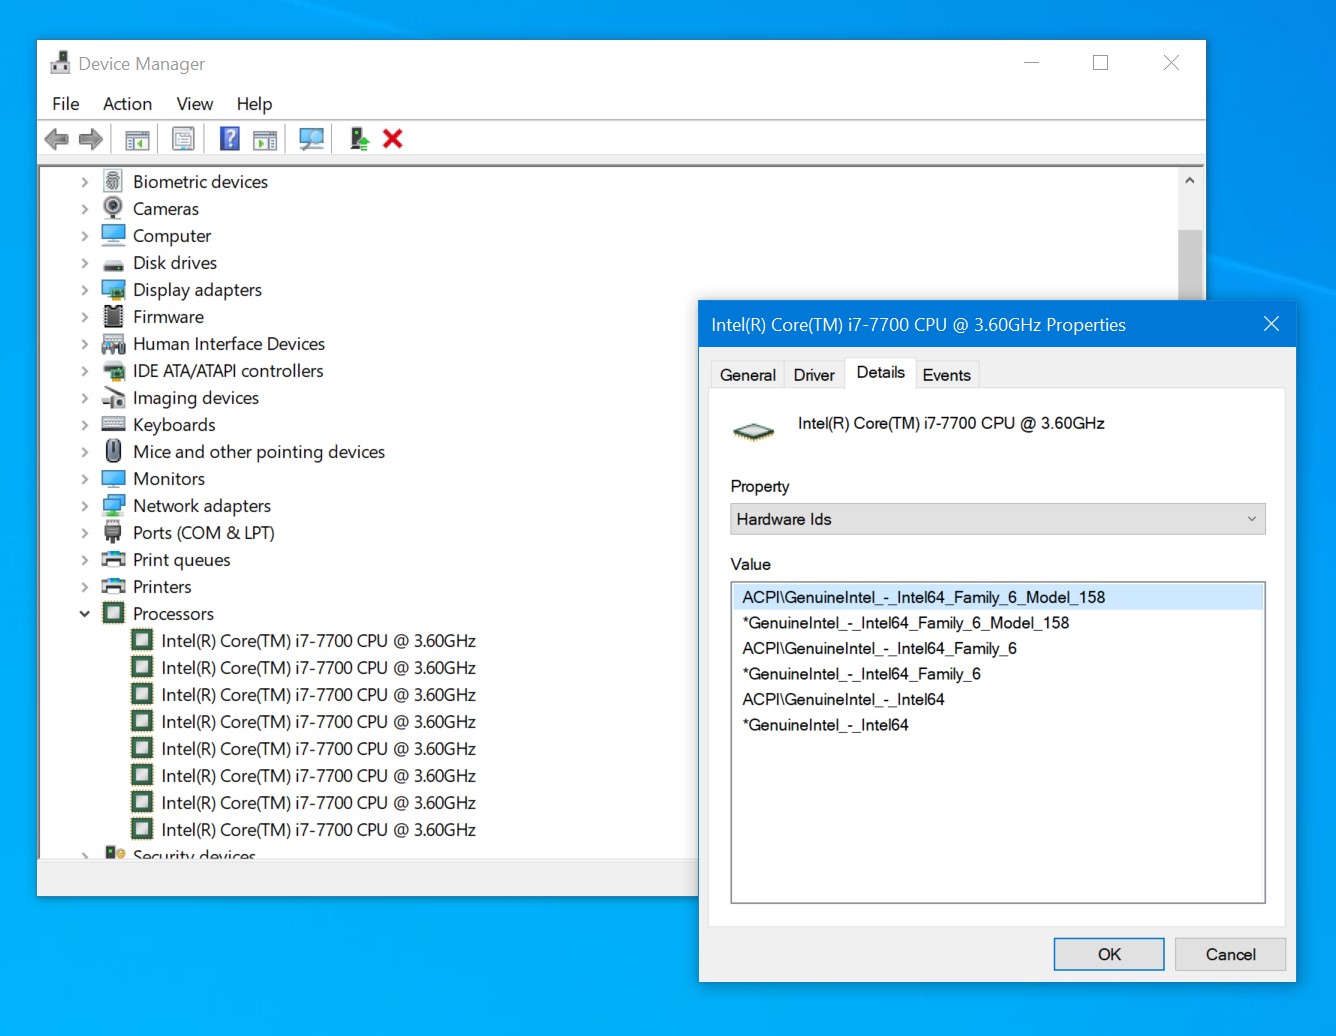 New Windows 10 Insider Preview Slow Build 18342.8 (19H1) - Feb. 27 713fddb143972c0c28625ea1f55a1e38.jpg